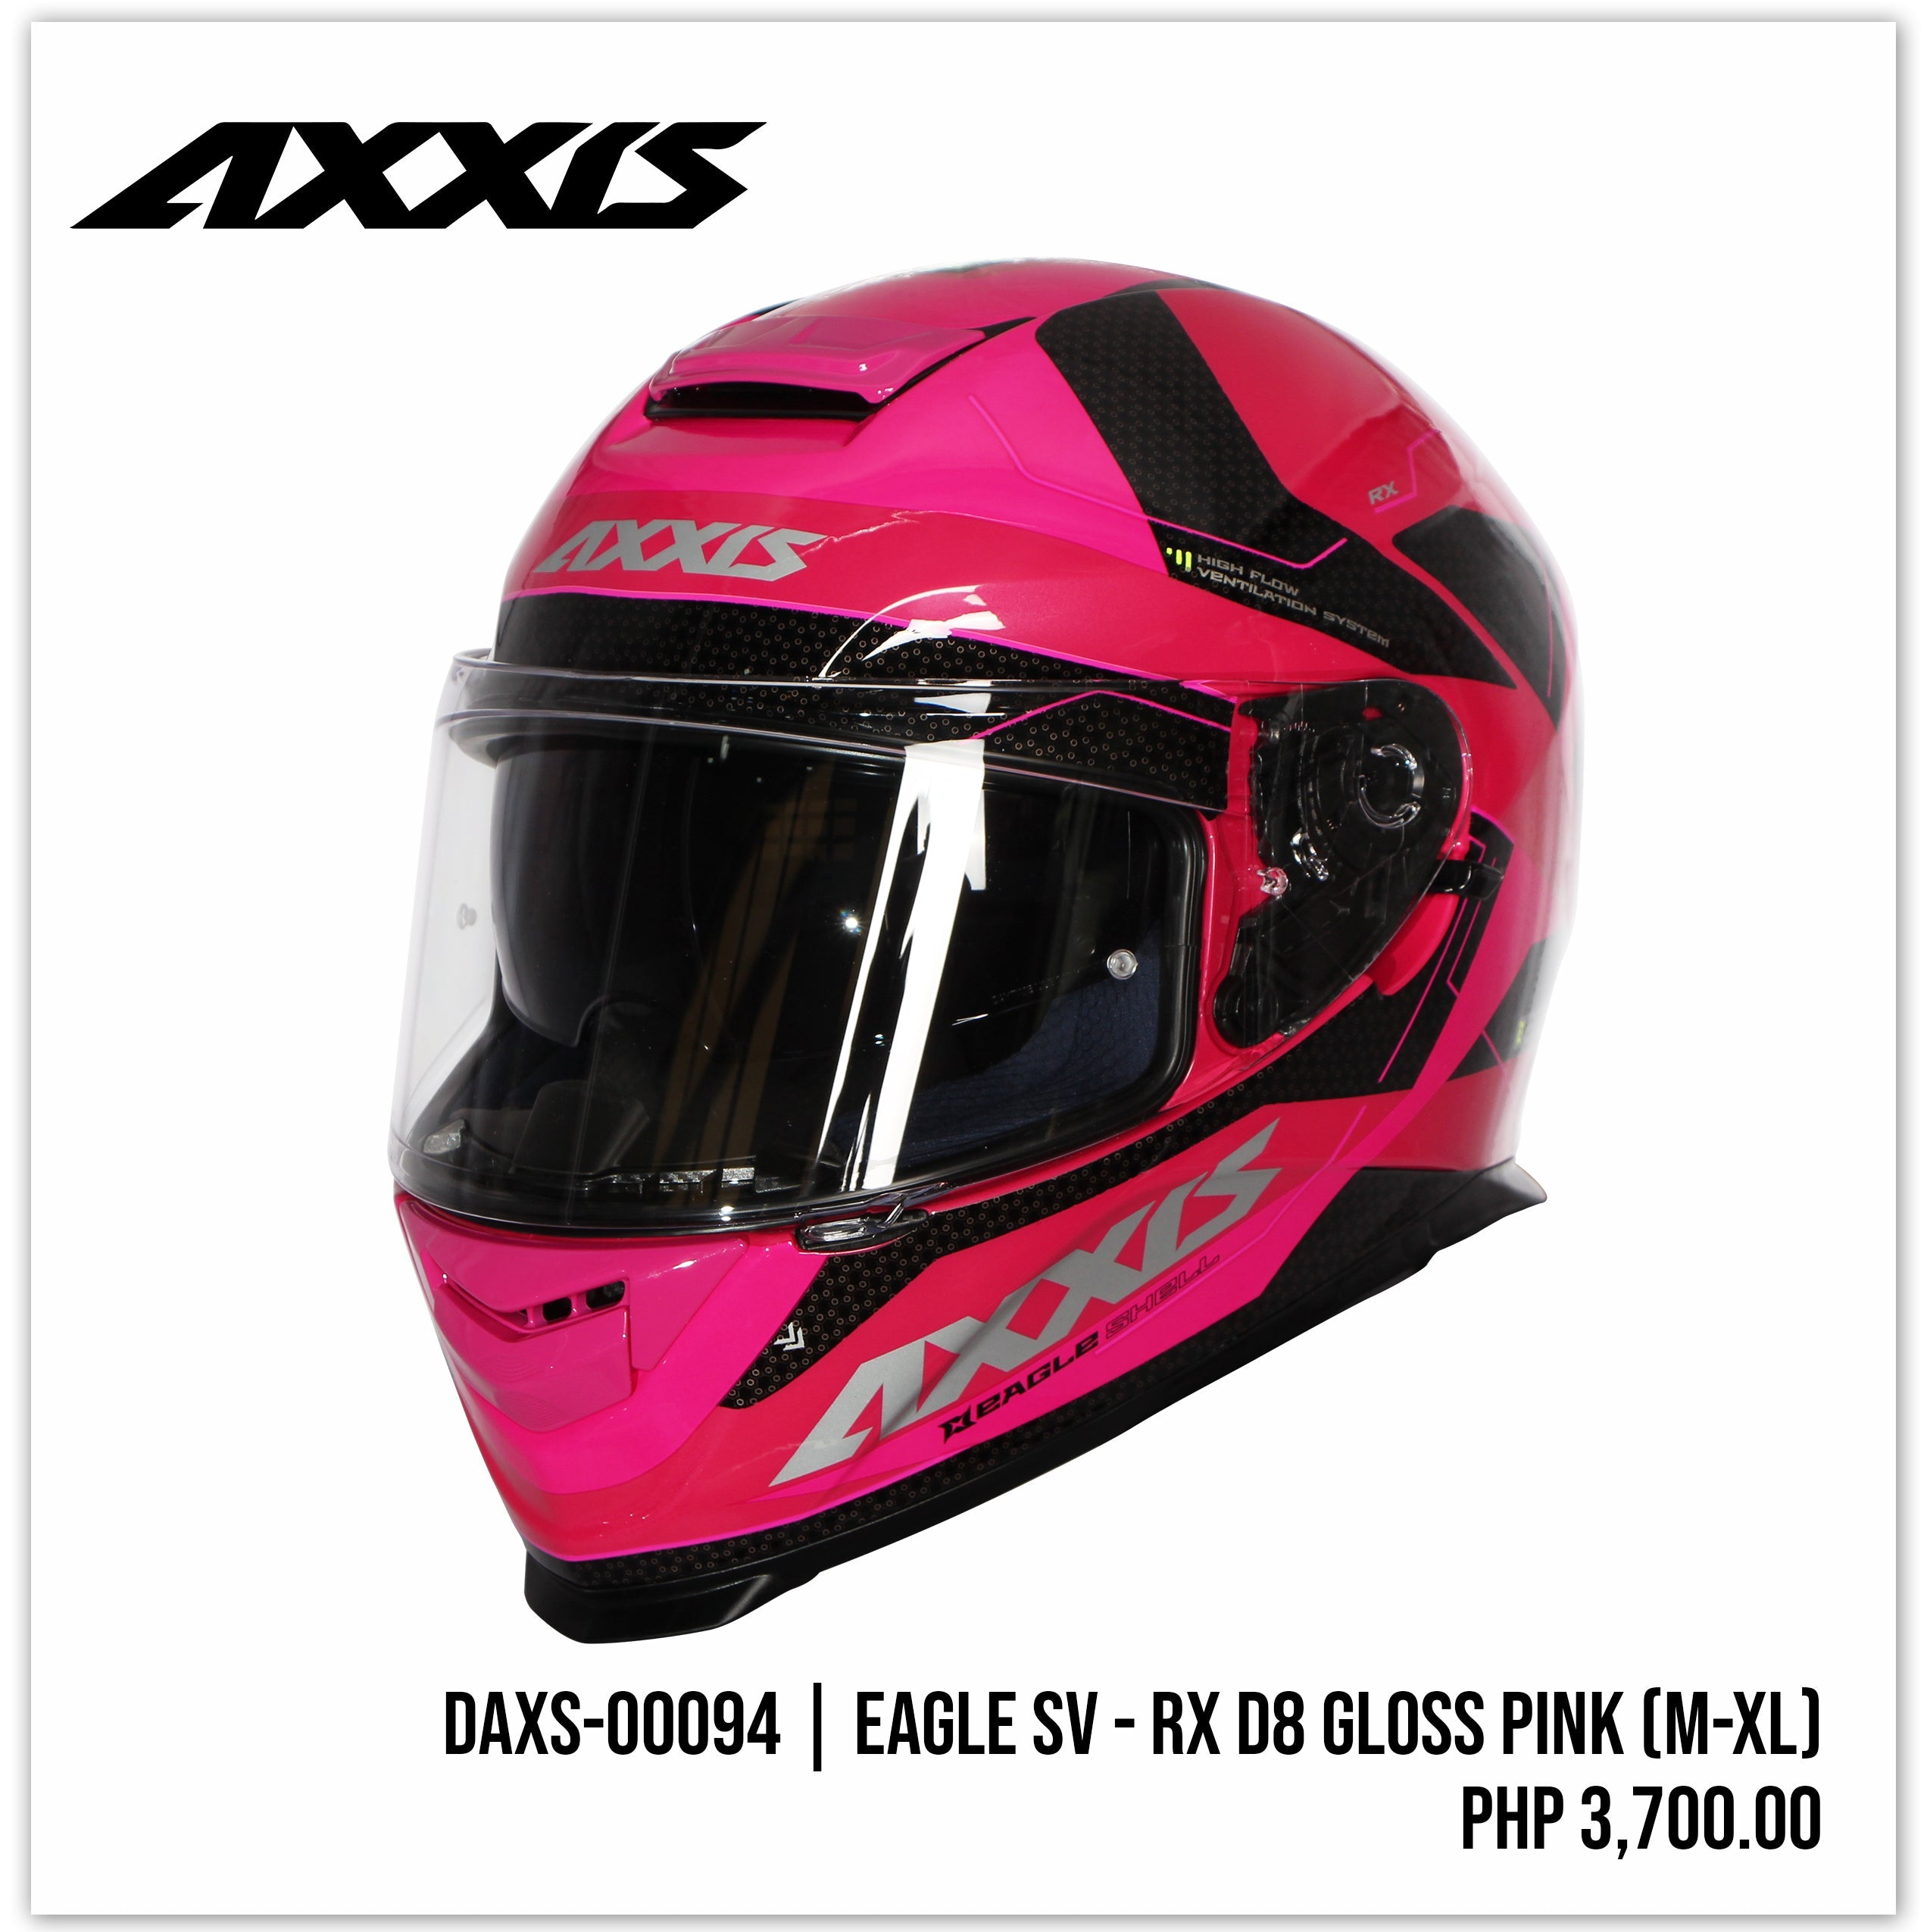 Eagle SV - RX D8 Gloss Pink